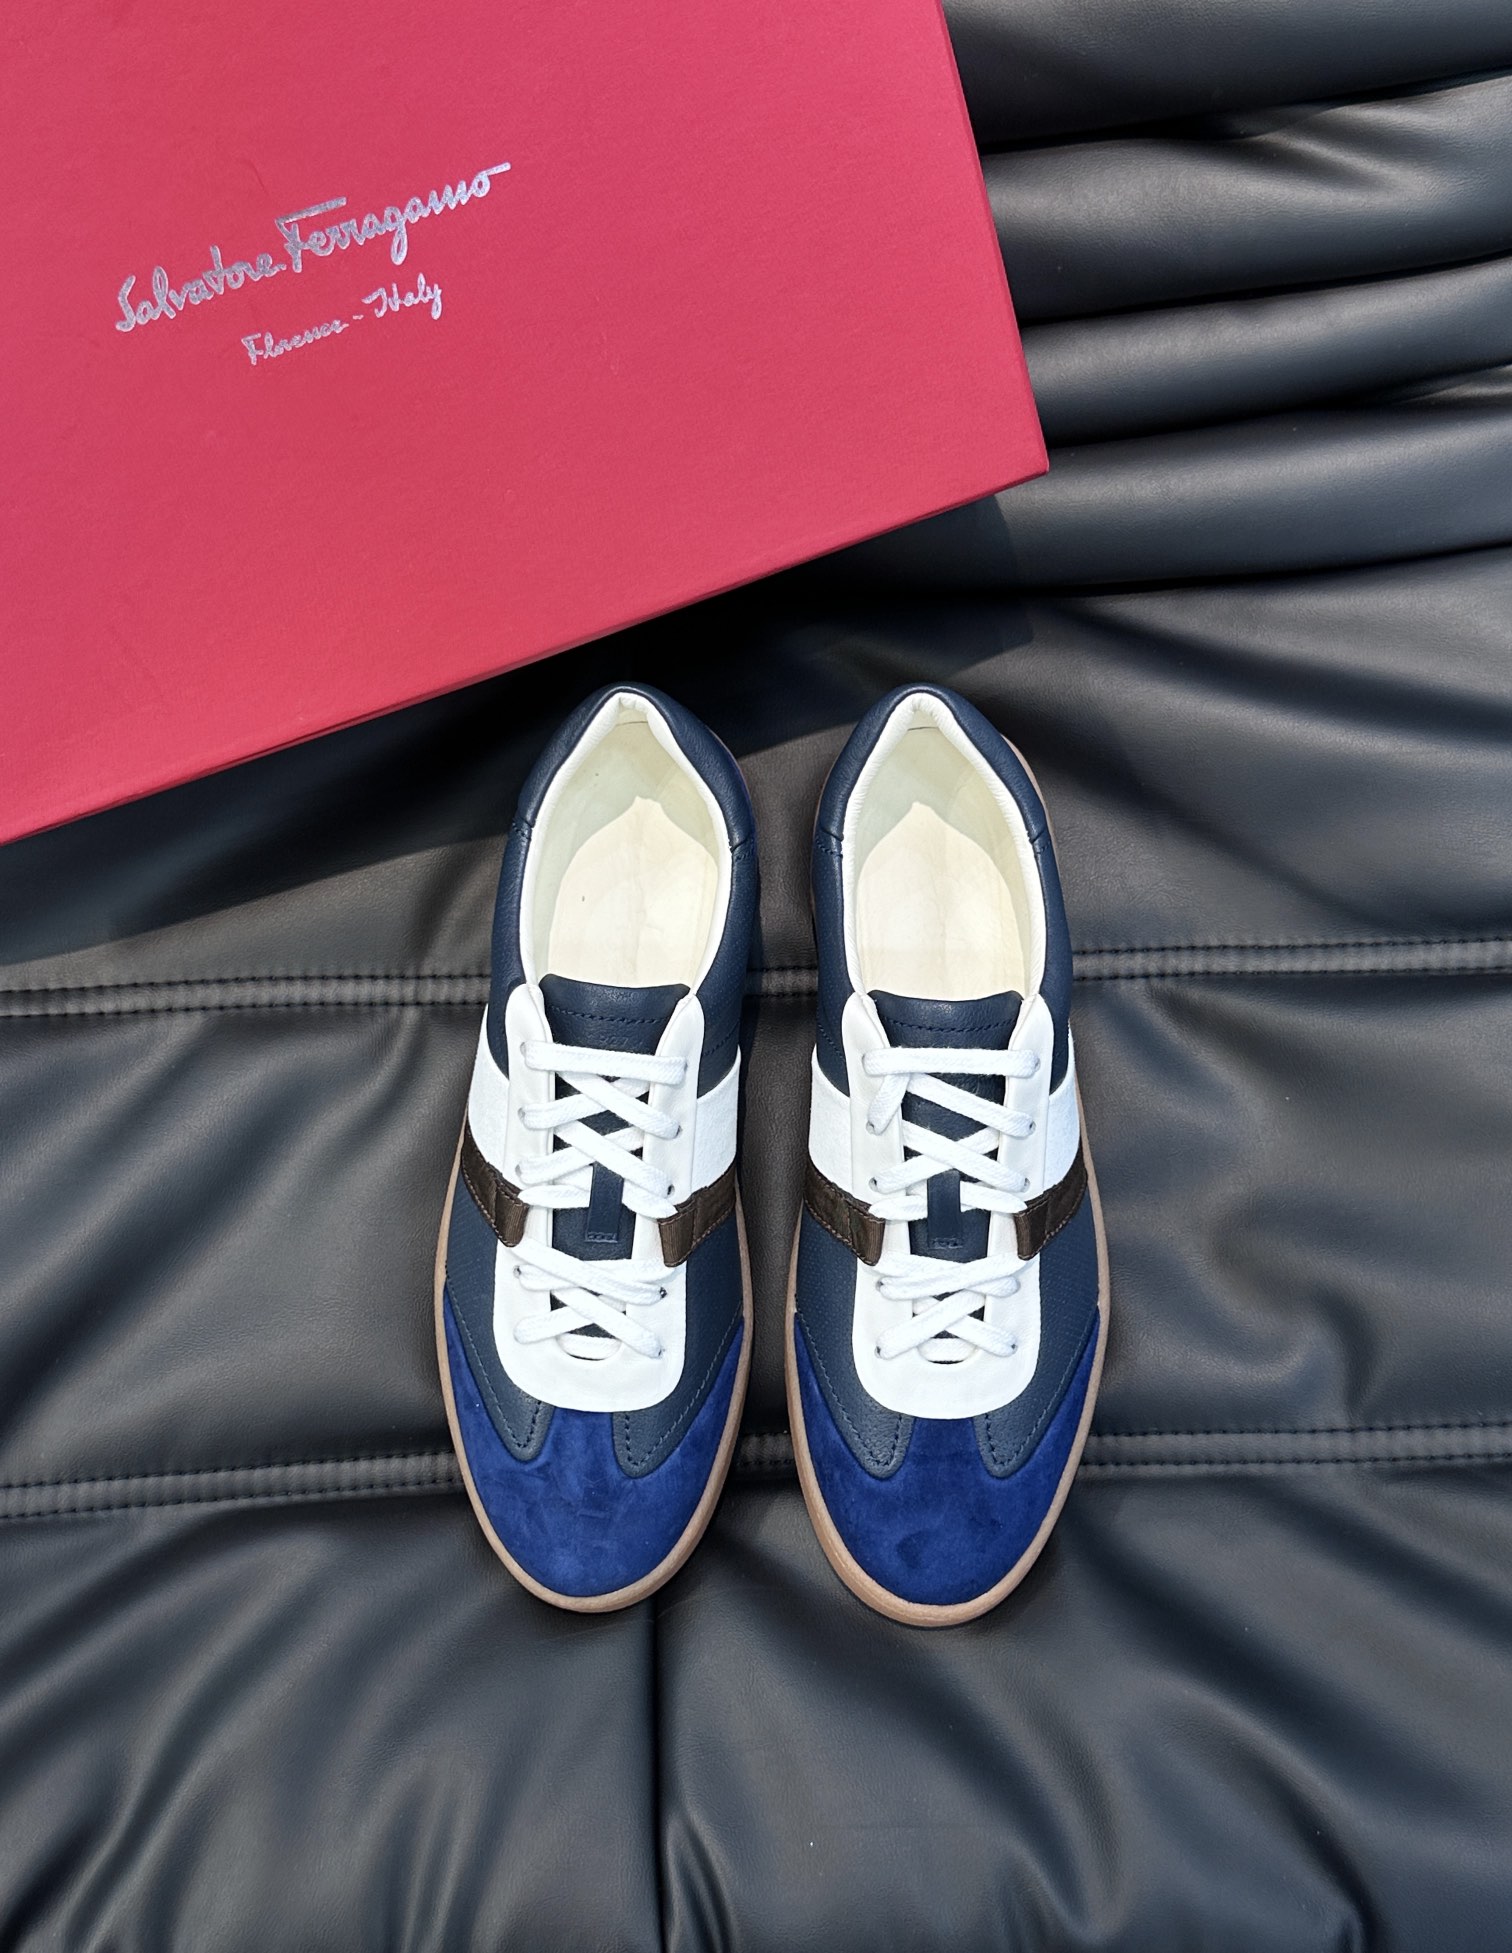 Ferragamo נעליים סניקרס למכור איכות גבוהה
 פירה גברים קווייד עור אמיתי גומא Vintage רגיל